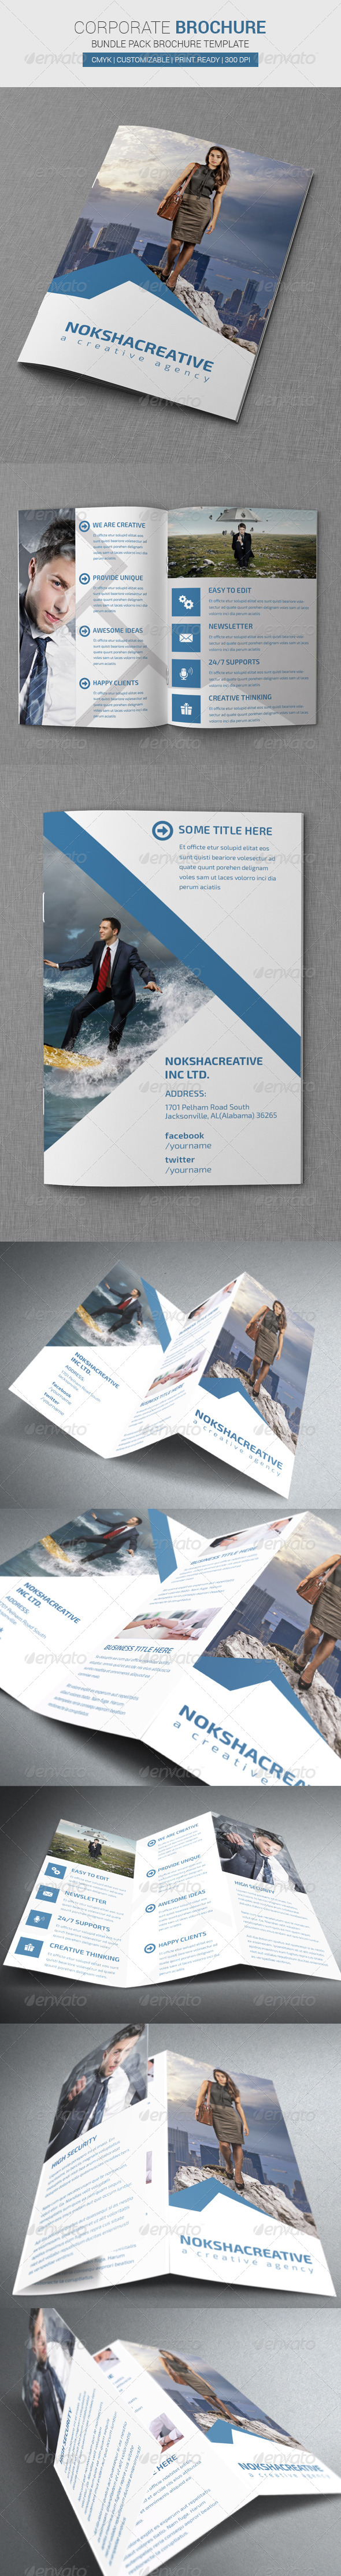 Corporate Brochure Bundle Pack (Corporate)